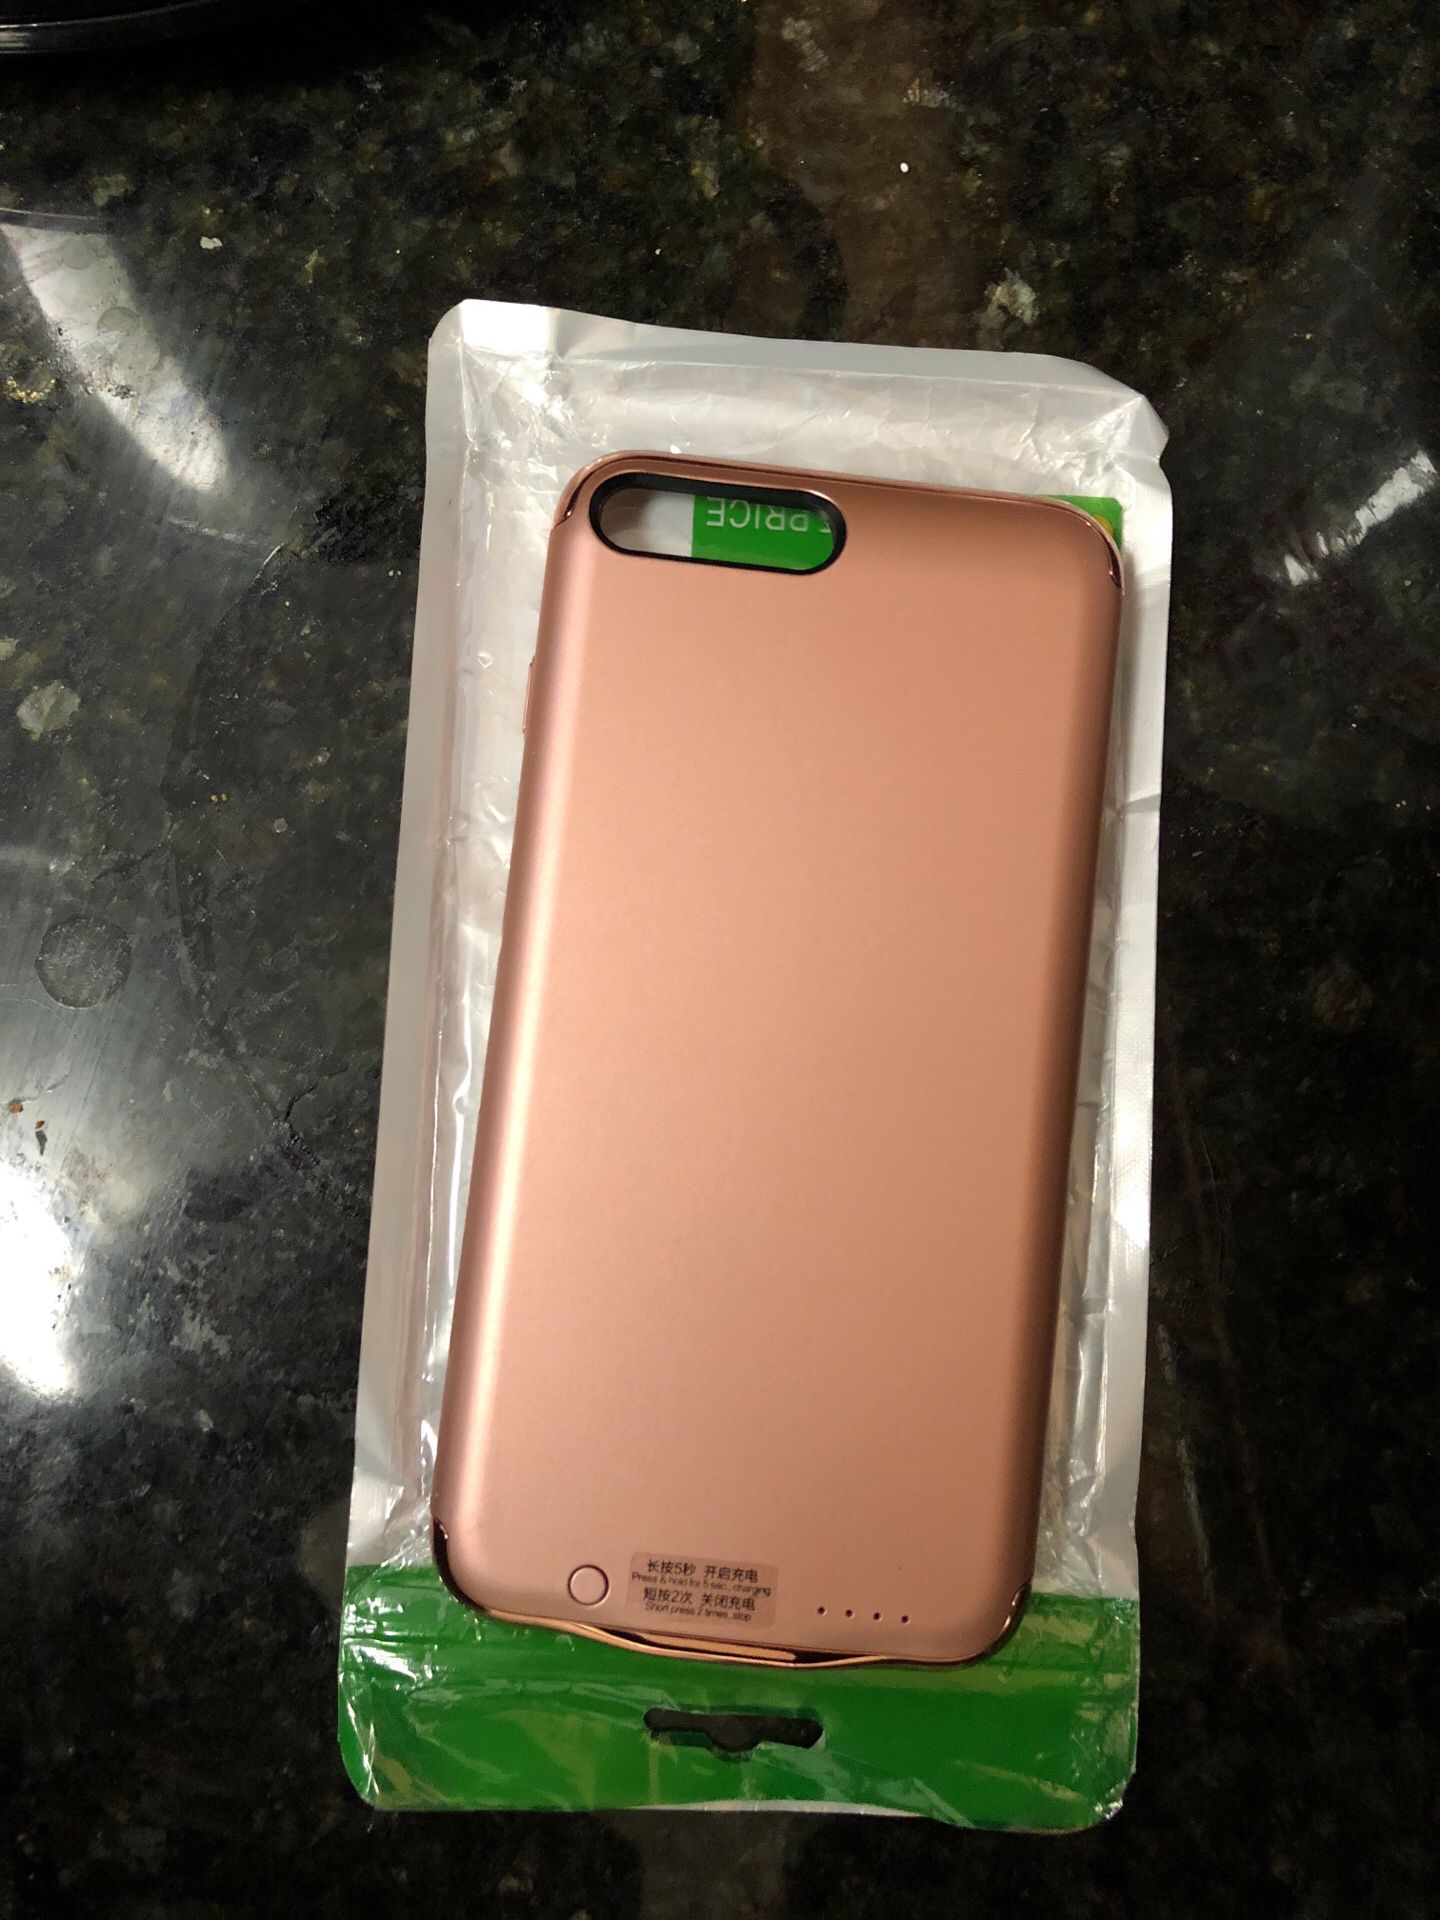 iPhone 7+ charging case